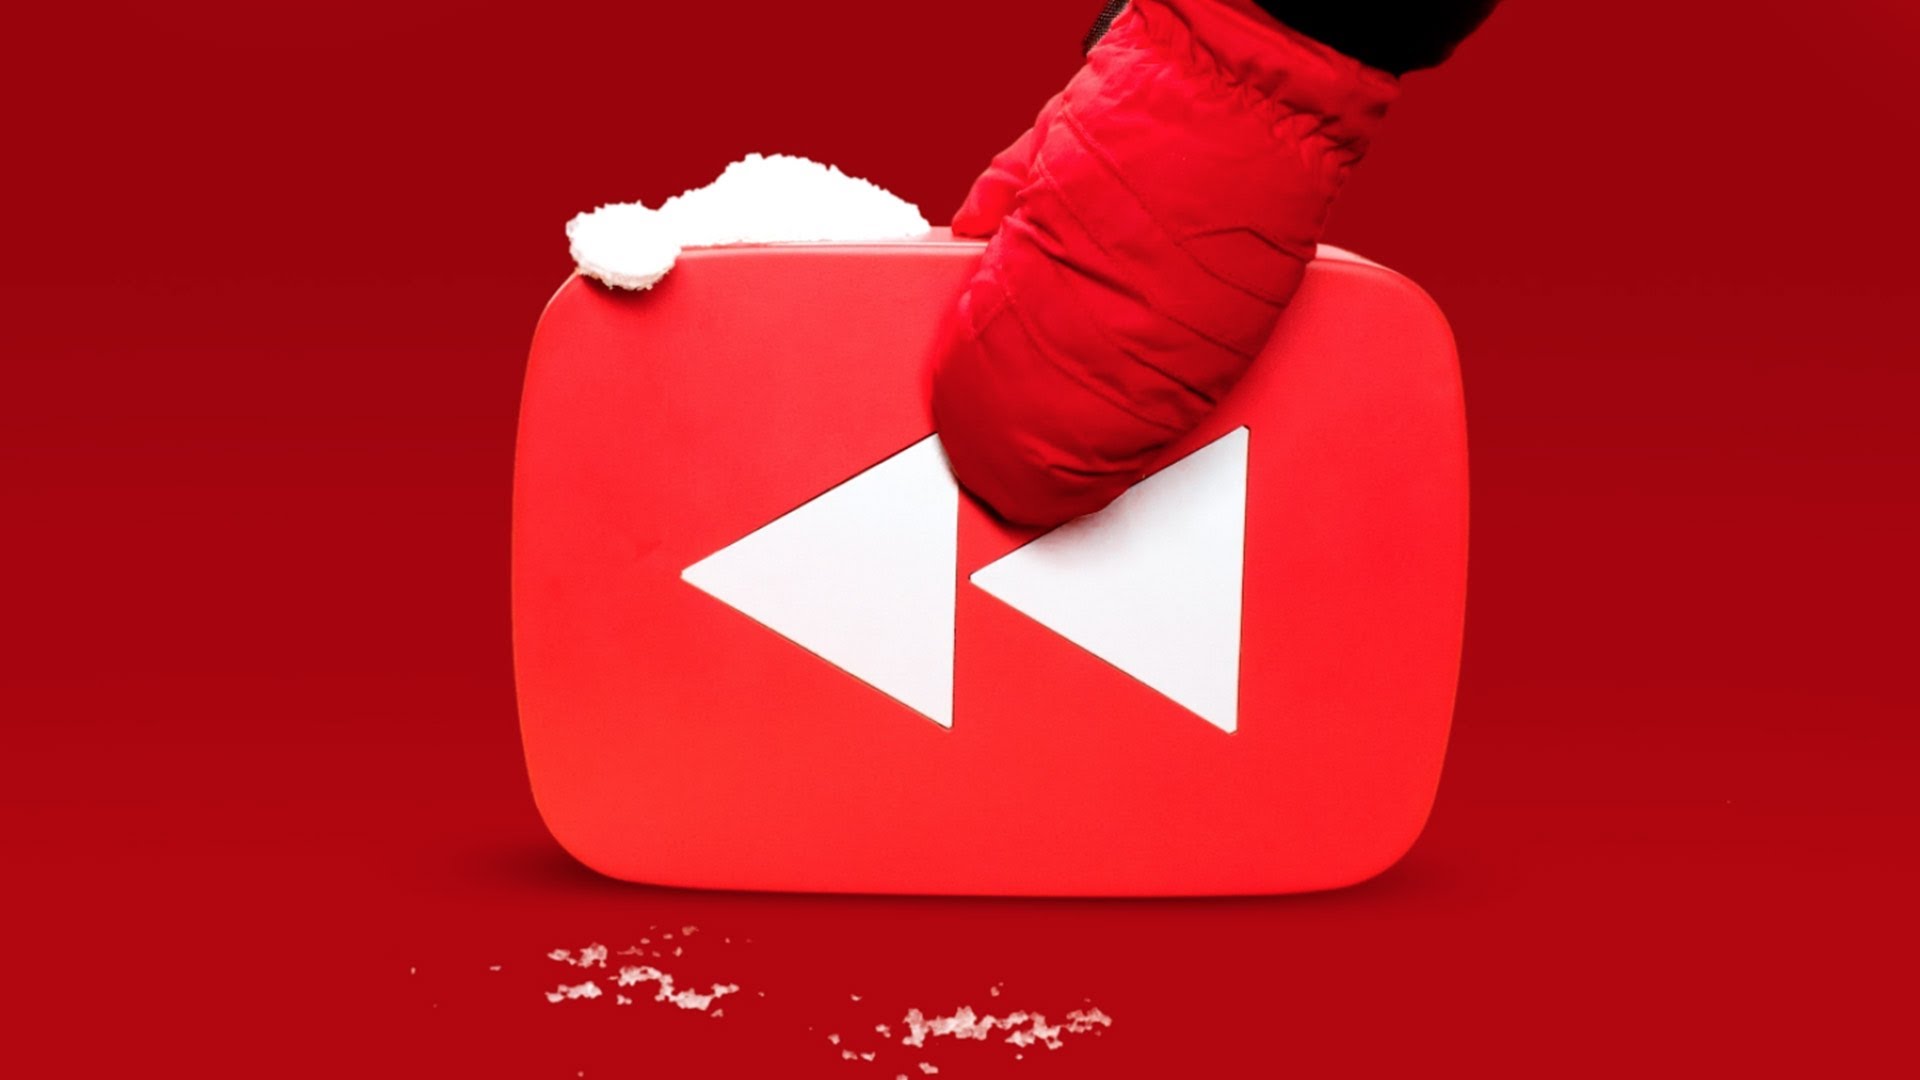 Youtube Rewind 2014